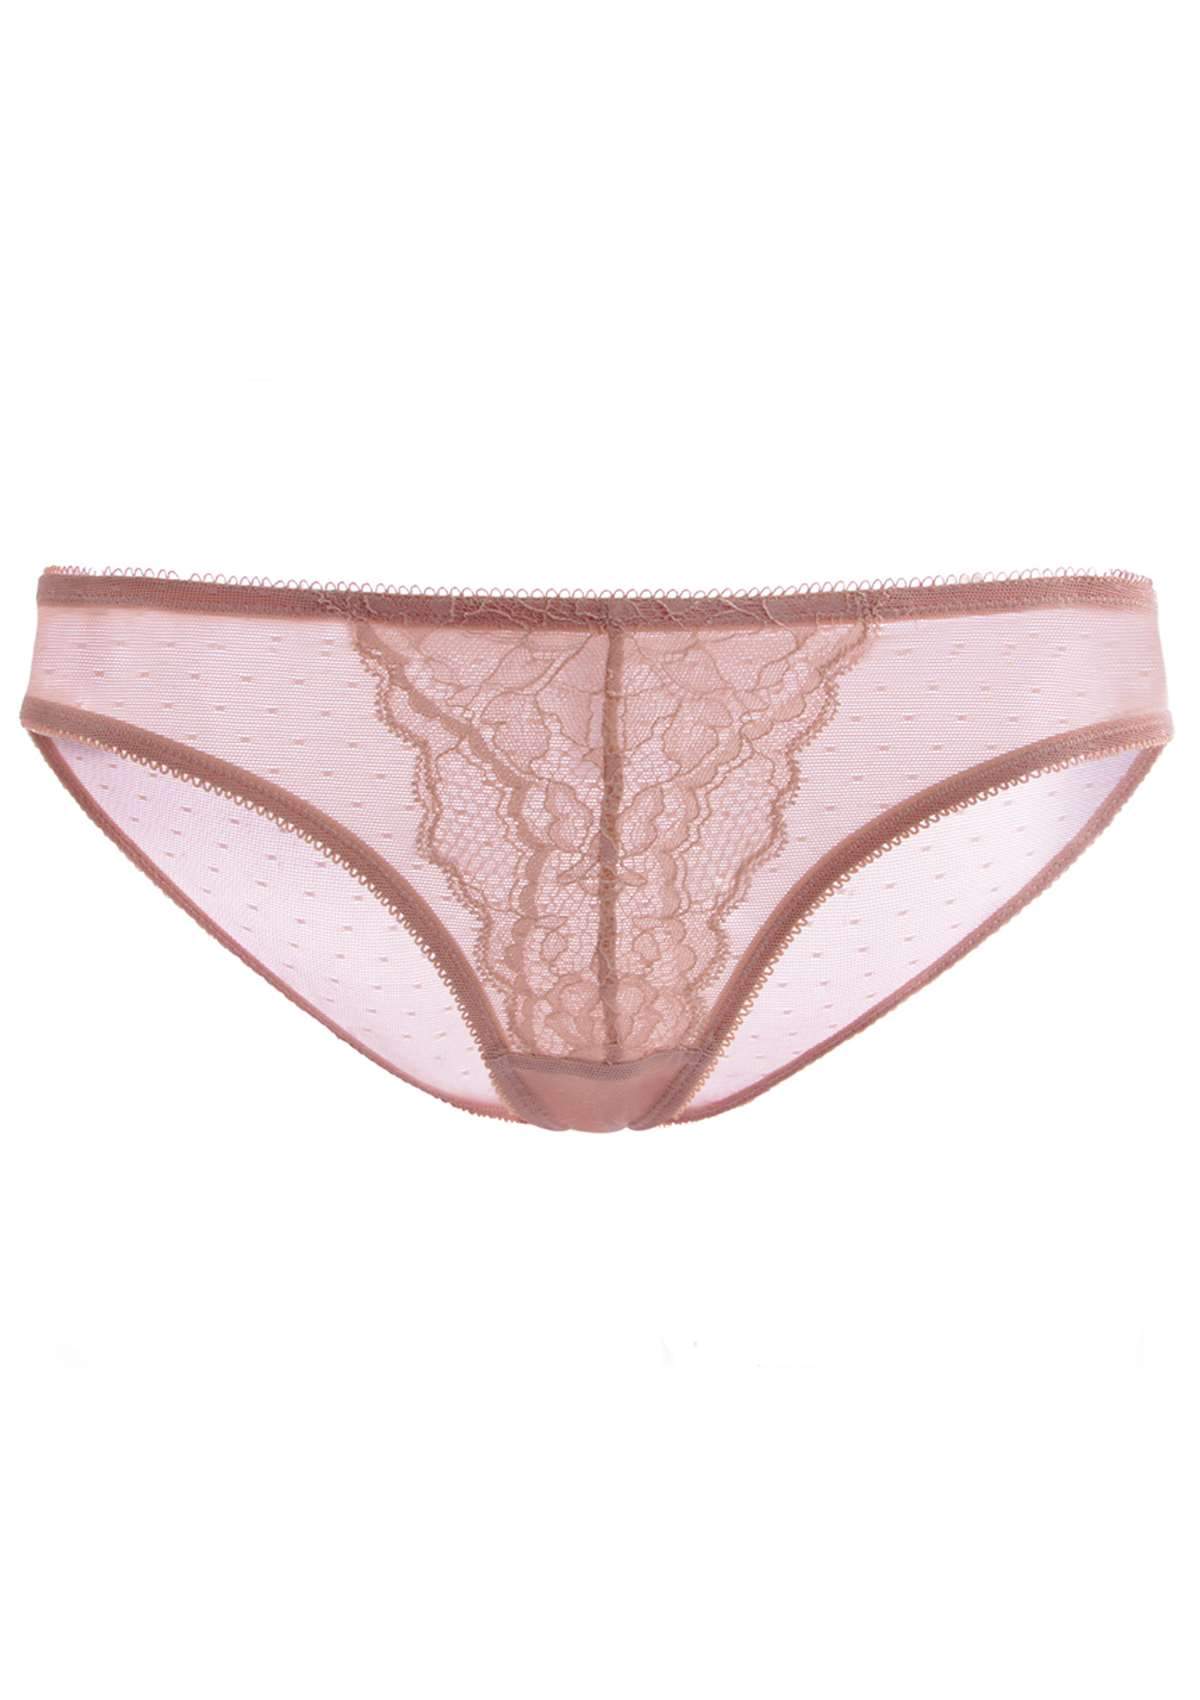 HSIA Enchante Sheer Lace Mesh Mid Rise Bikini Underwear - M / Dark Pink